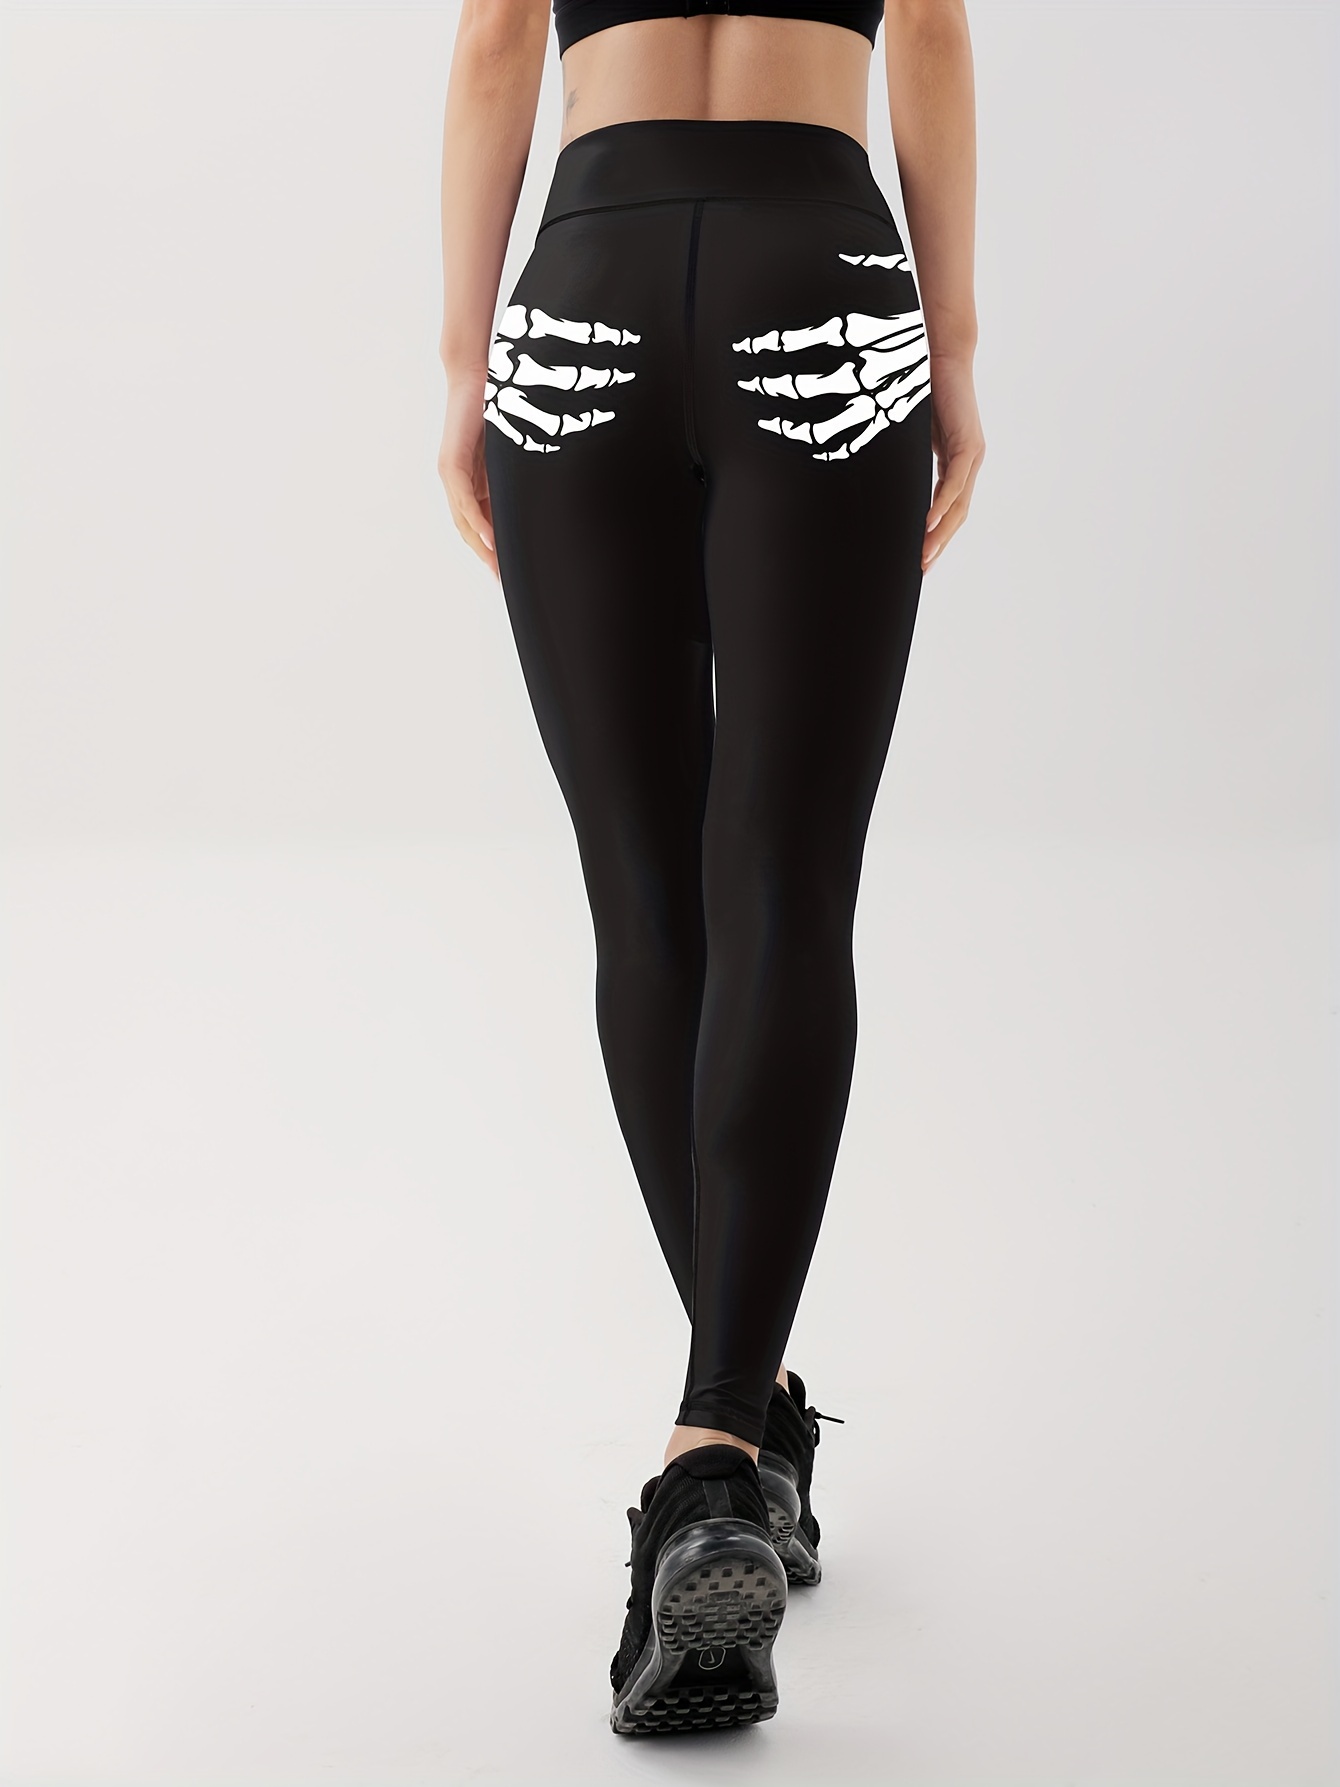 Leggings Sports Yoga Pants Digital 3D Printed Fire Skeleton Hot in